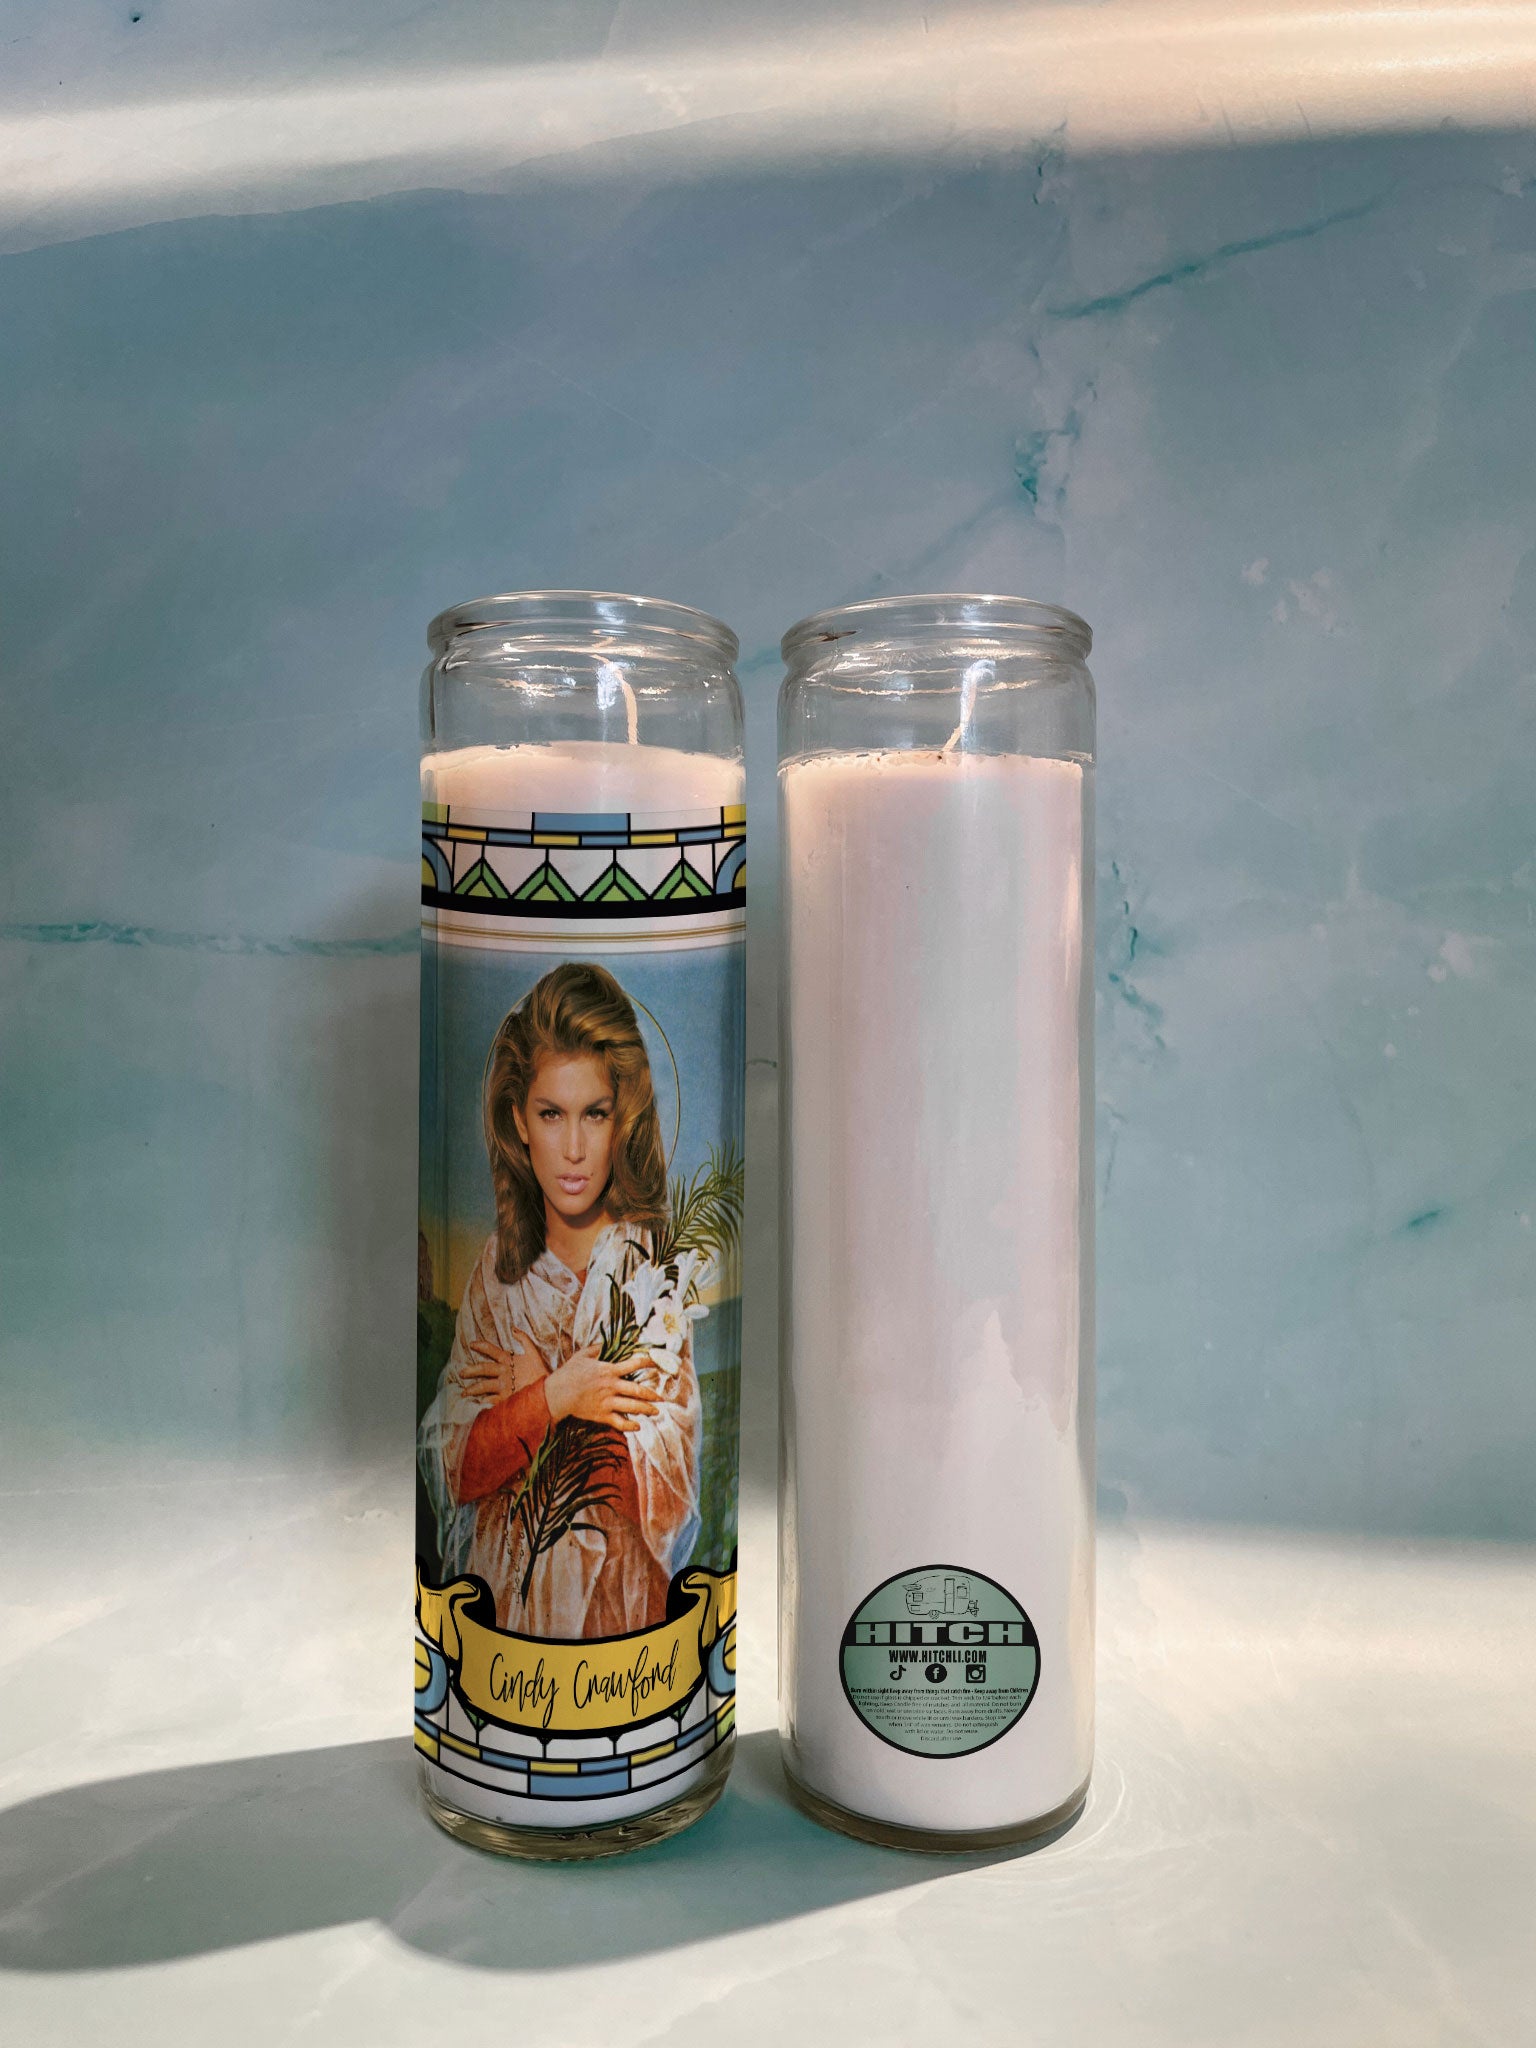 Cindy Crawford Original Prayer Candle